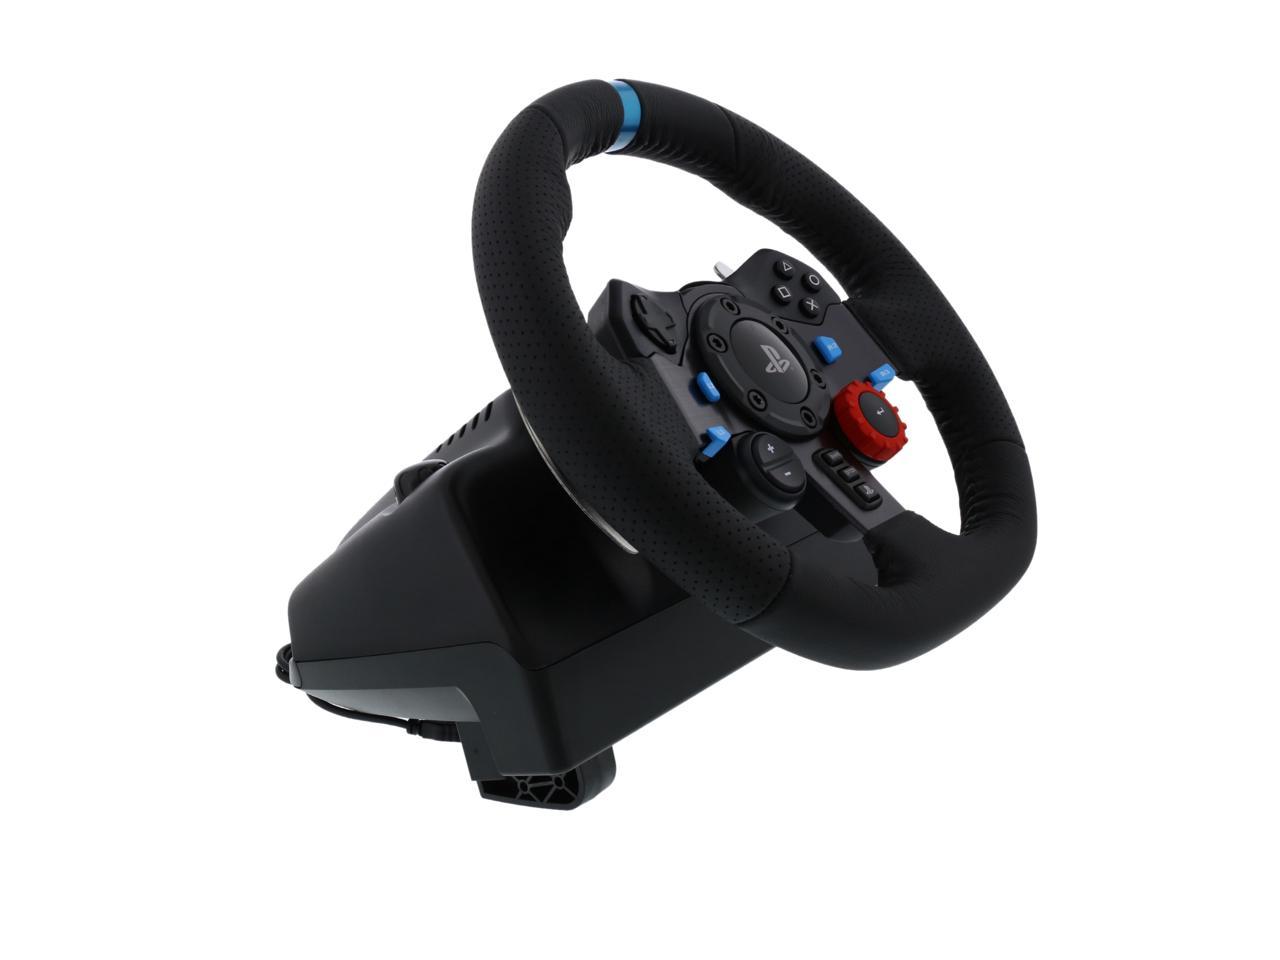 tilgive Ekstrem Partina City Logitech G29 Driving Force Racing Wheel for PS4, PS3, PC - Newegg.com